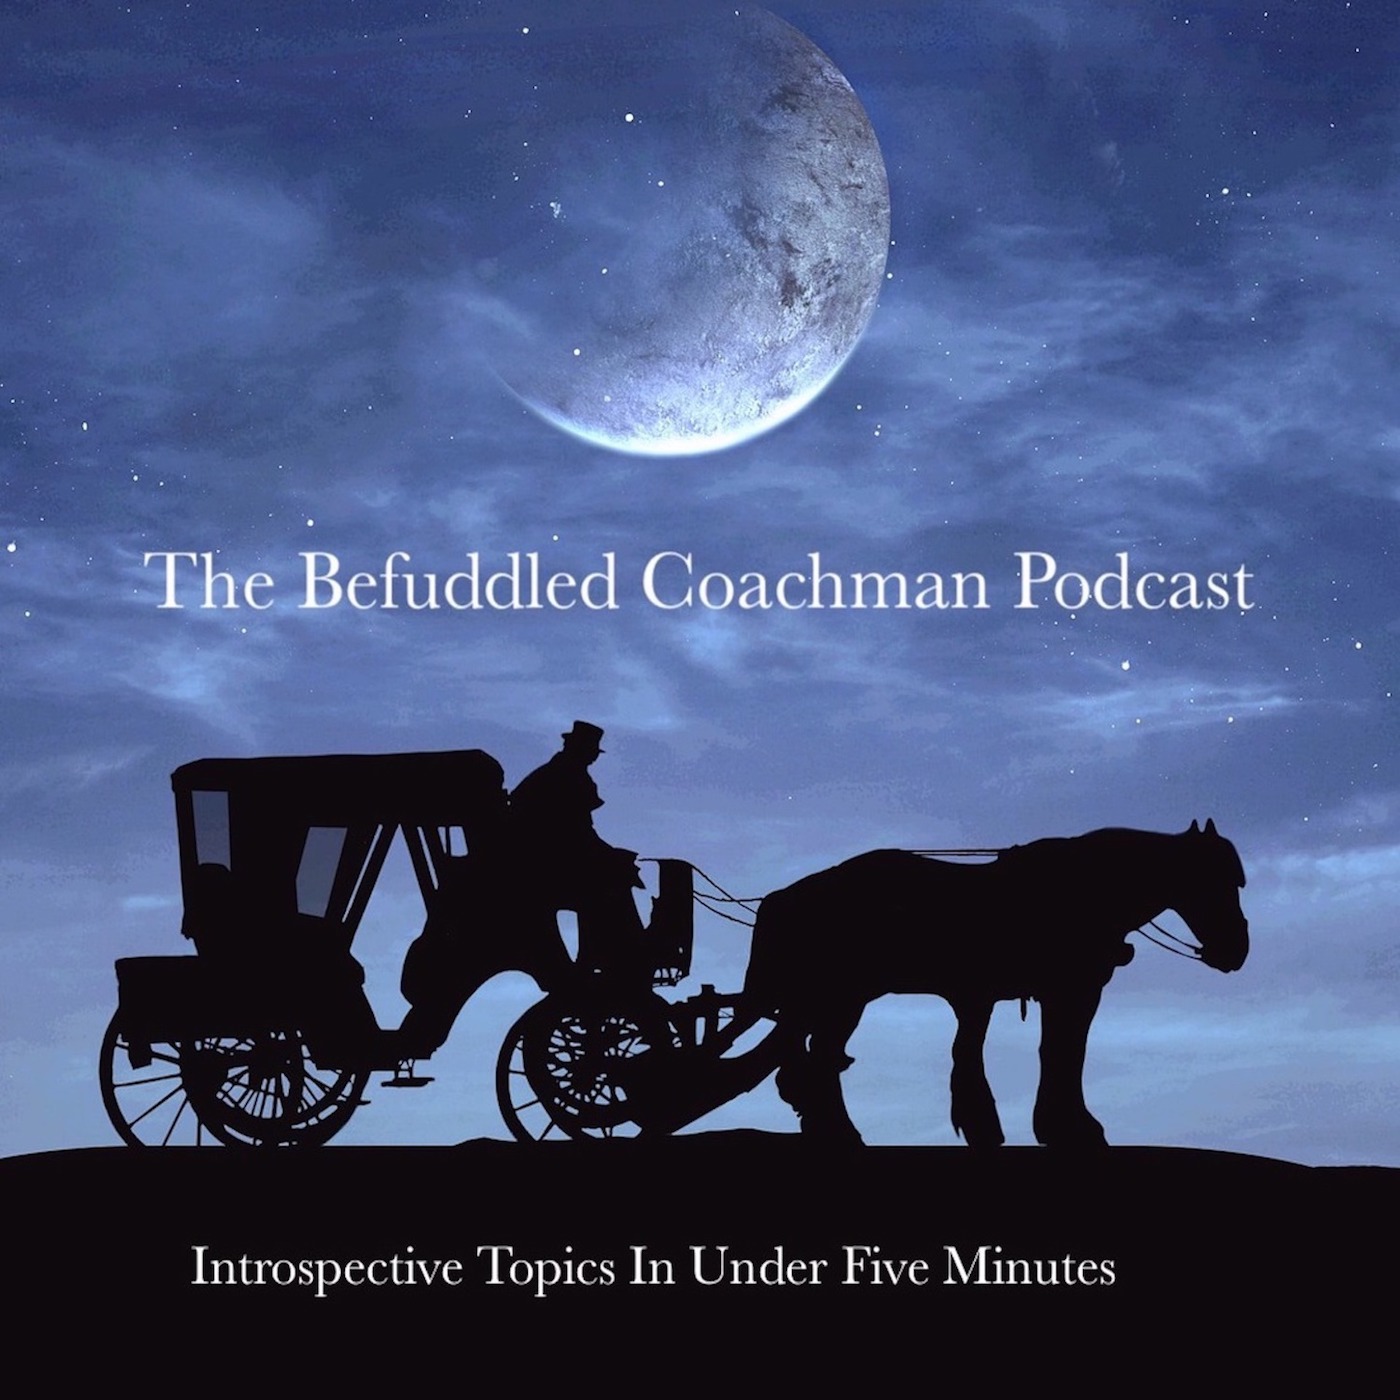 The Befuddled Coachman Podcast